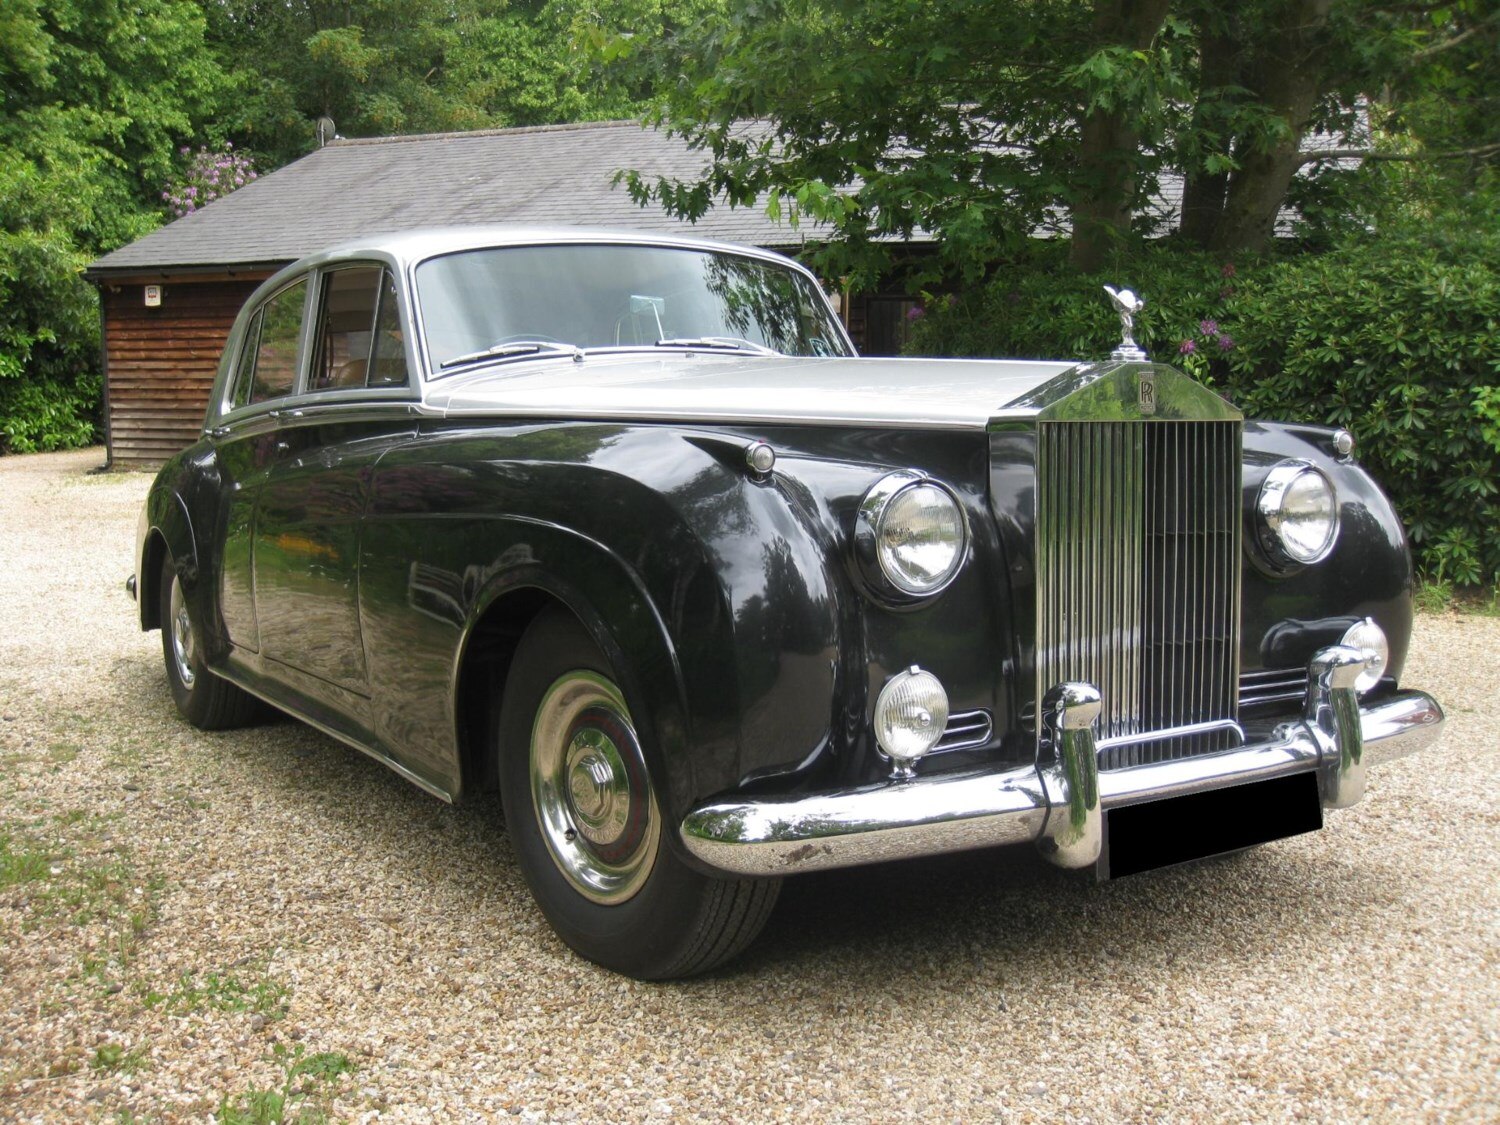 1962 Rolls Royce Silver Cloud Ii Automatic for Sale | CCFS